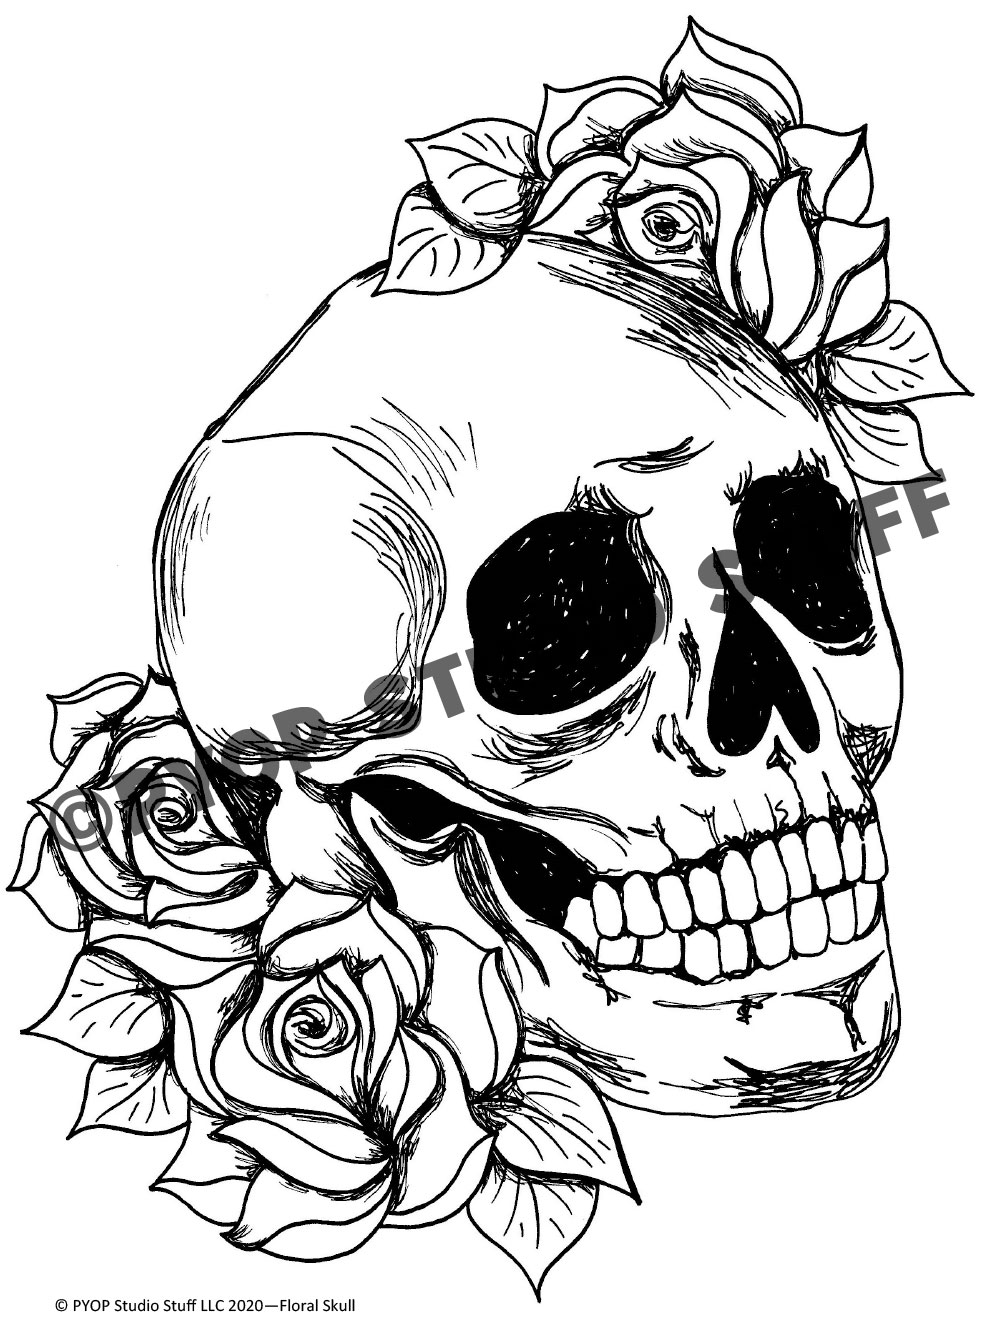 Floral Skull – PYOP Studio Stuff